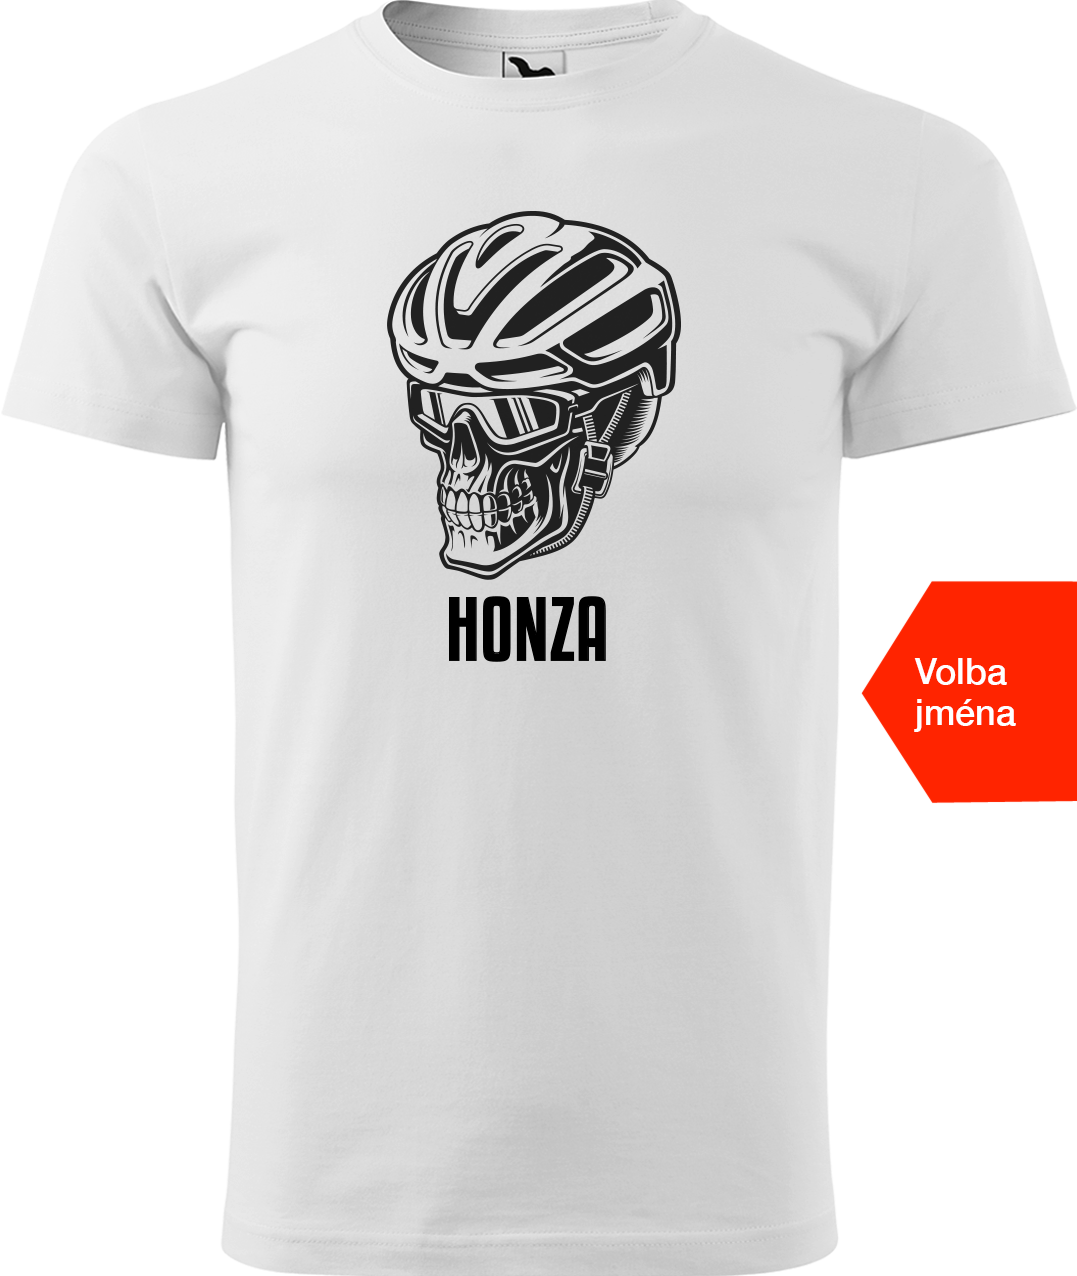 Pánské tričko pro cyklistu se jménem - Lebka v helmě Velikost: 4XL, Barva: Bílá (00)